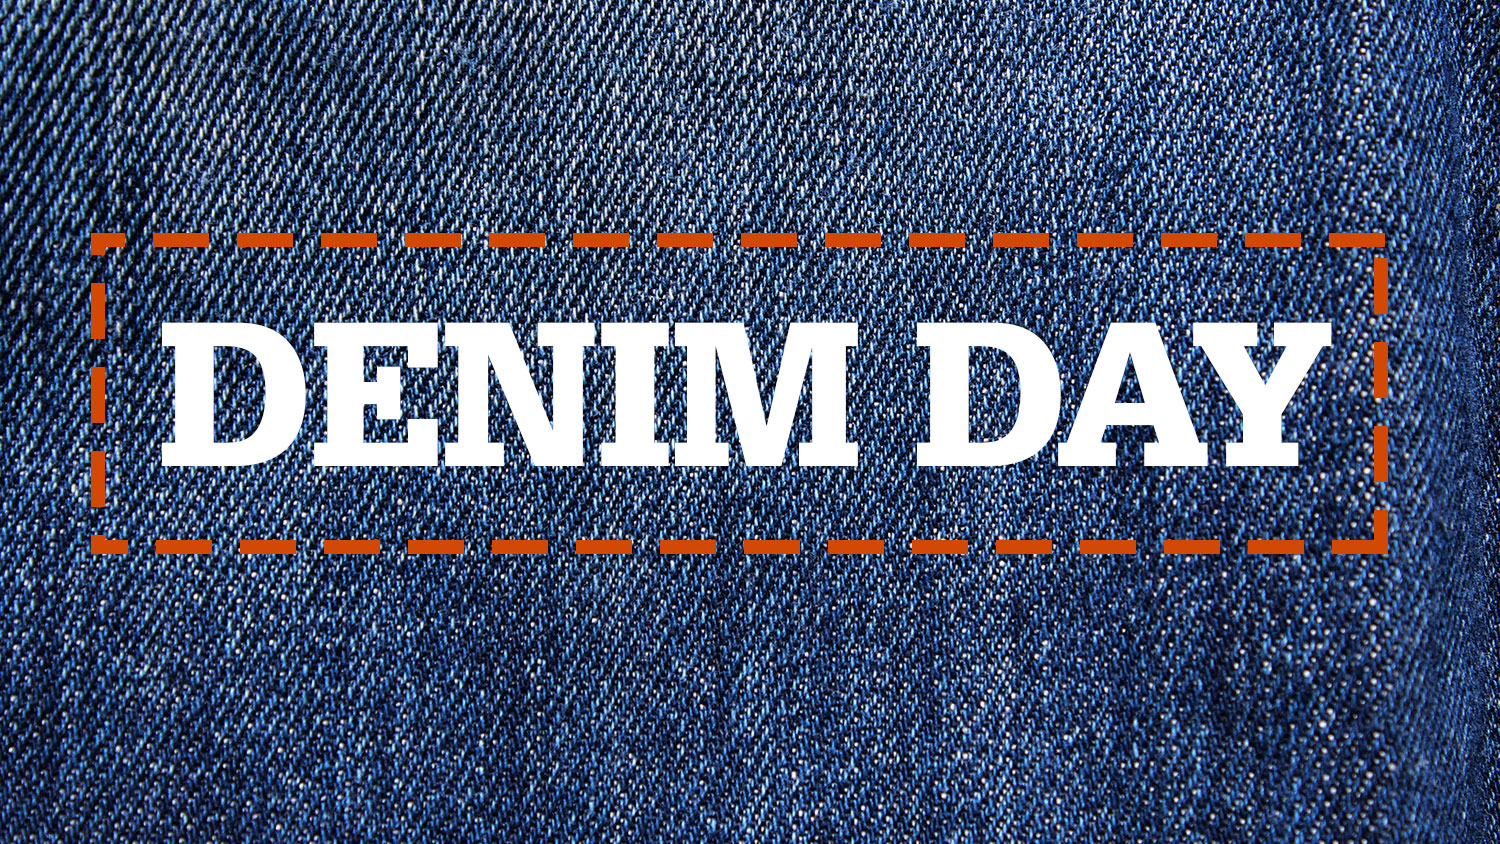 Students encouraged to wear denim April 26